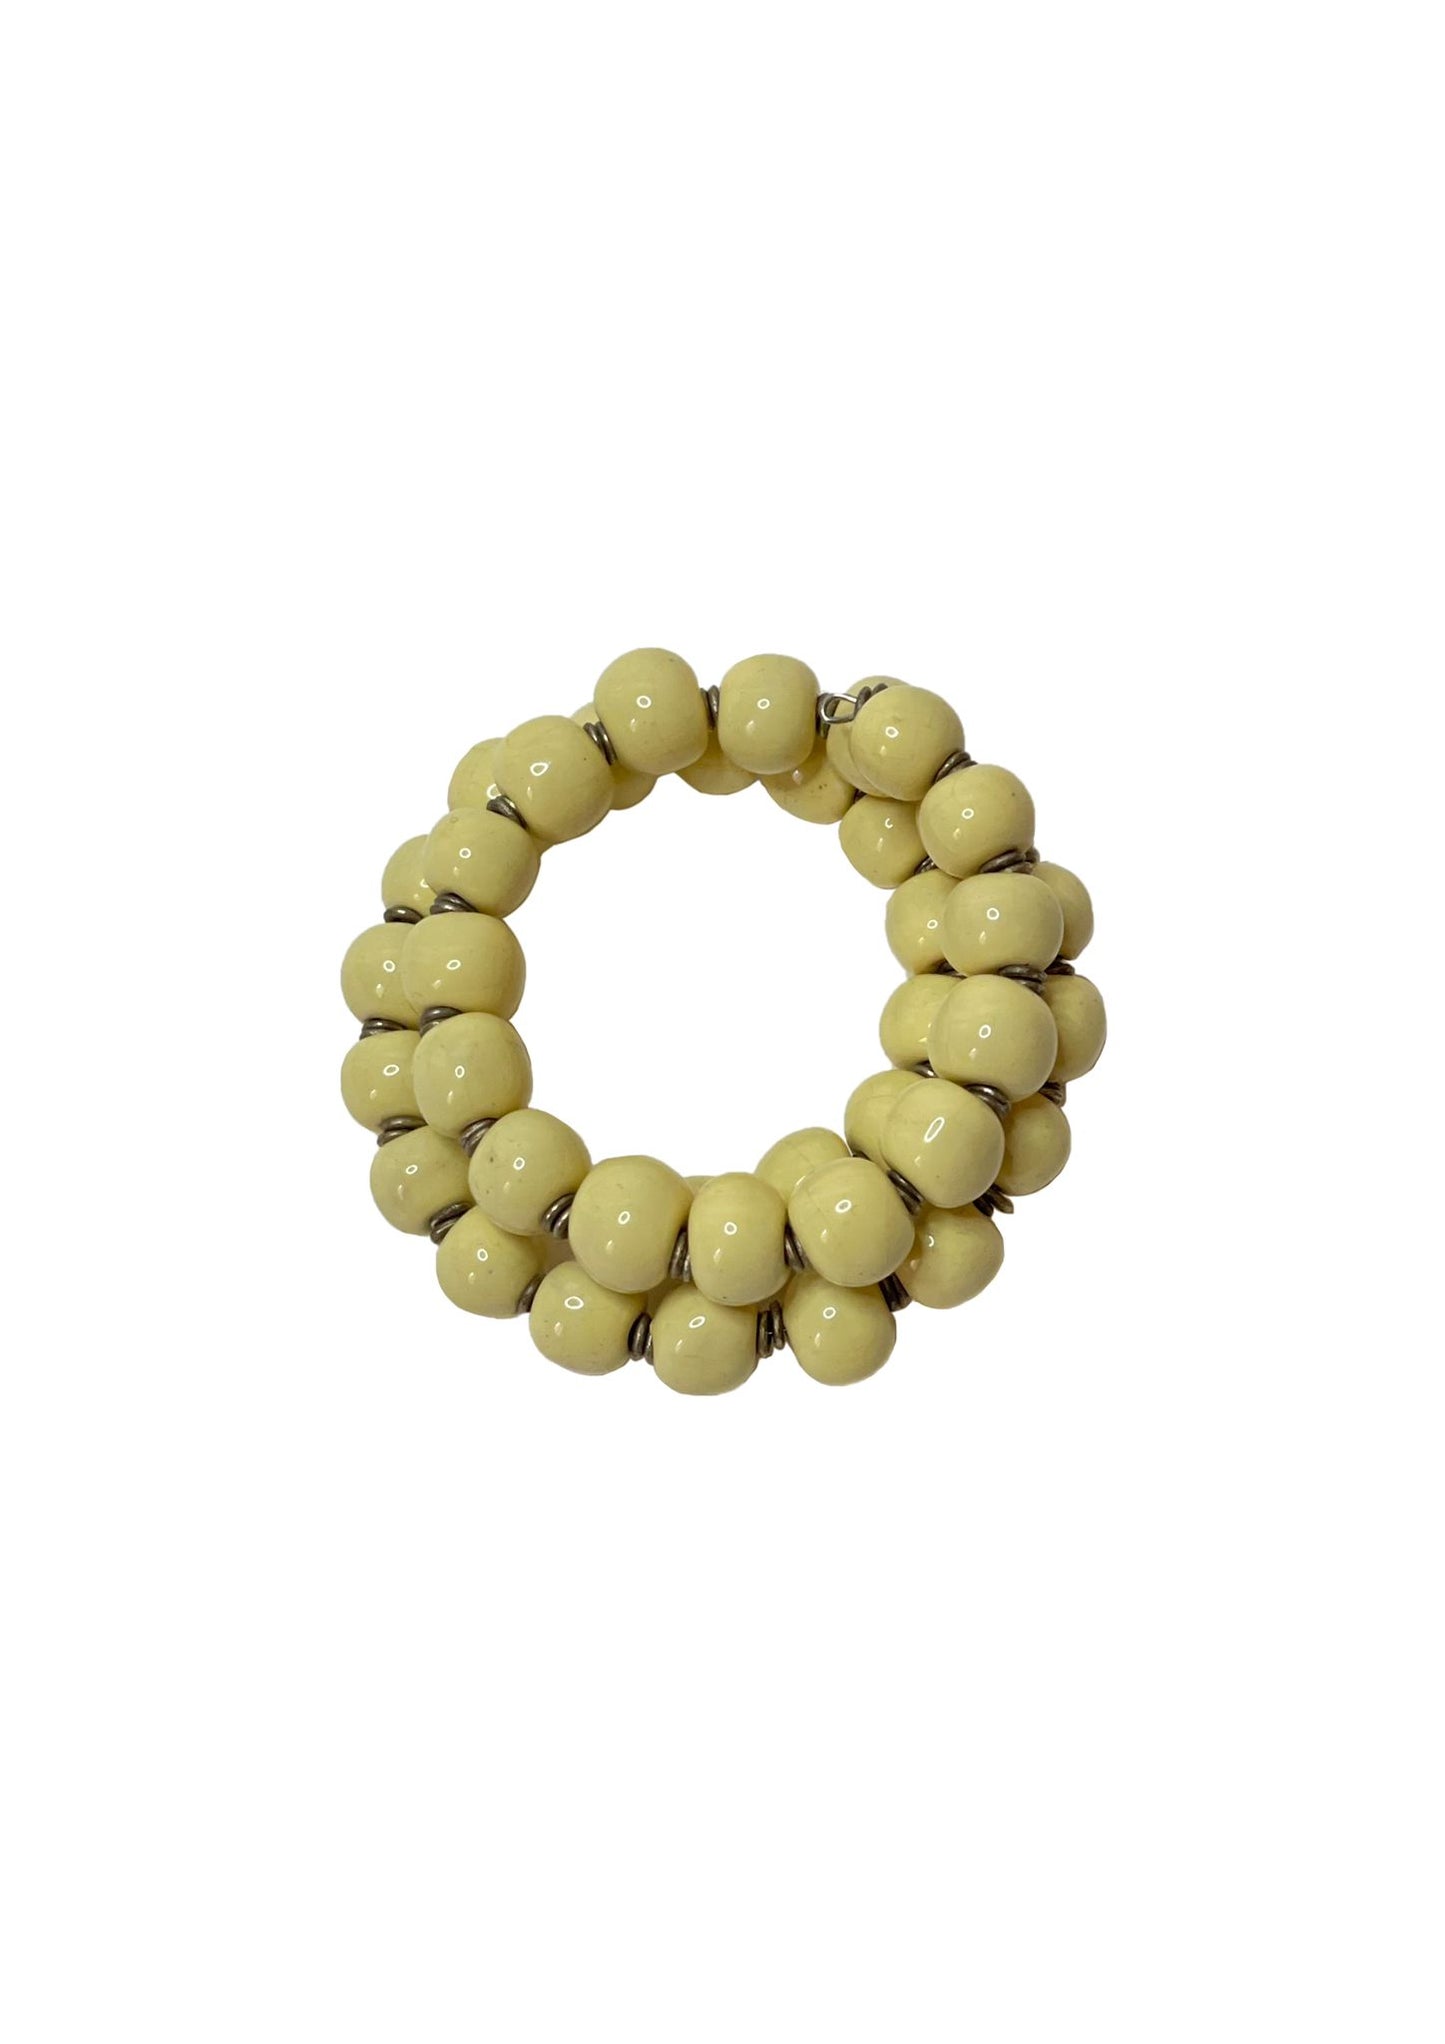 Ceramic Beads Bracelets